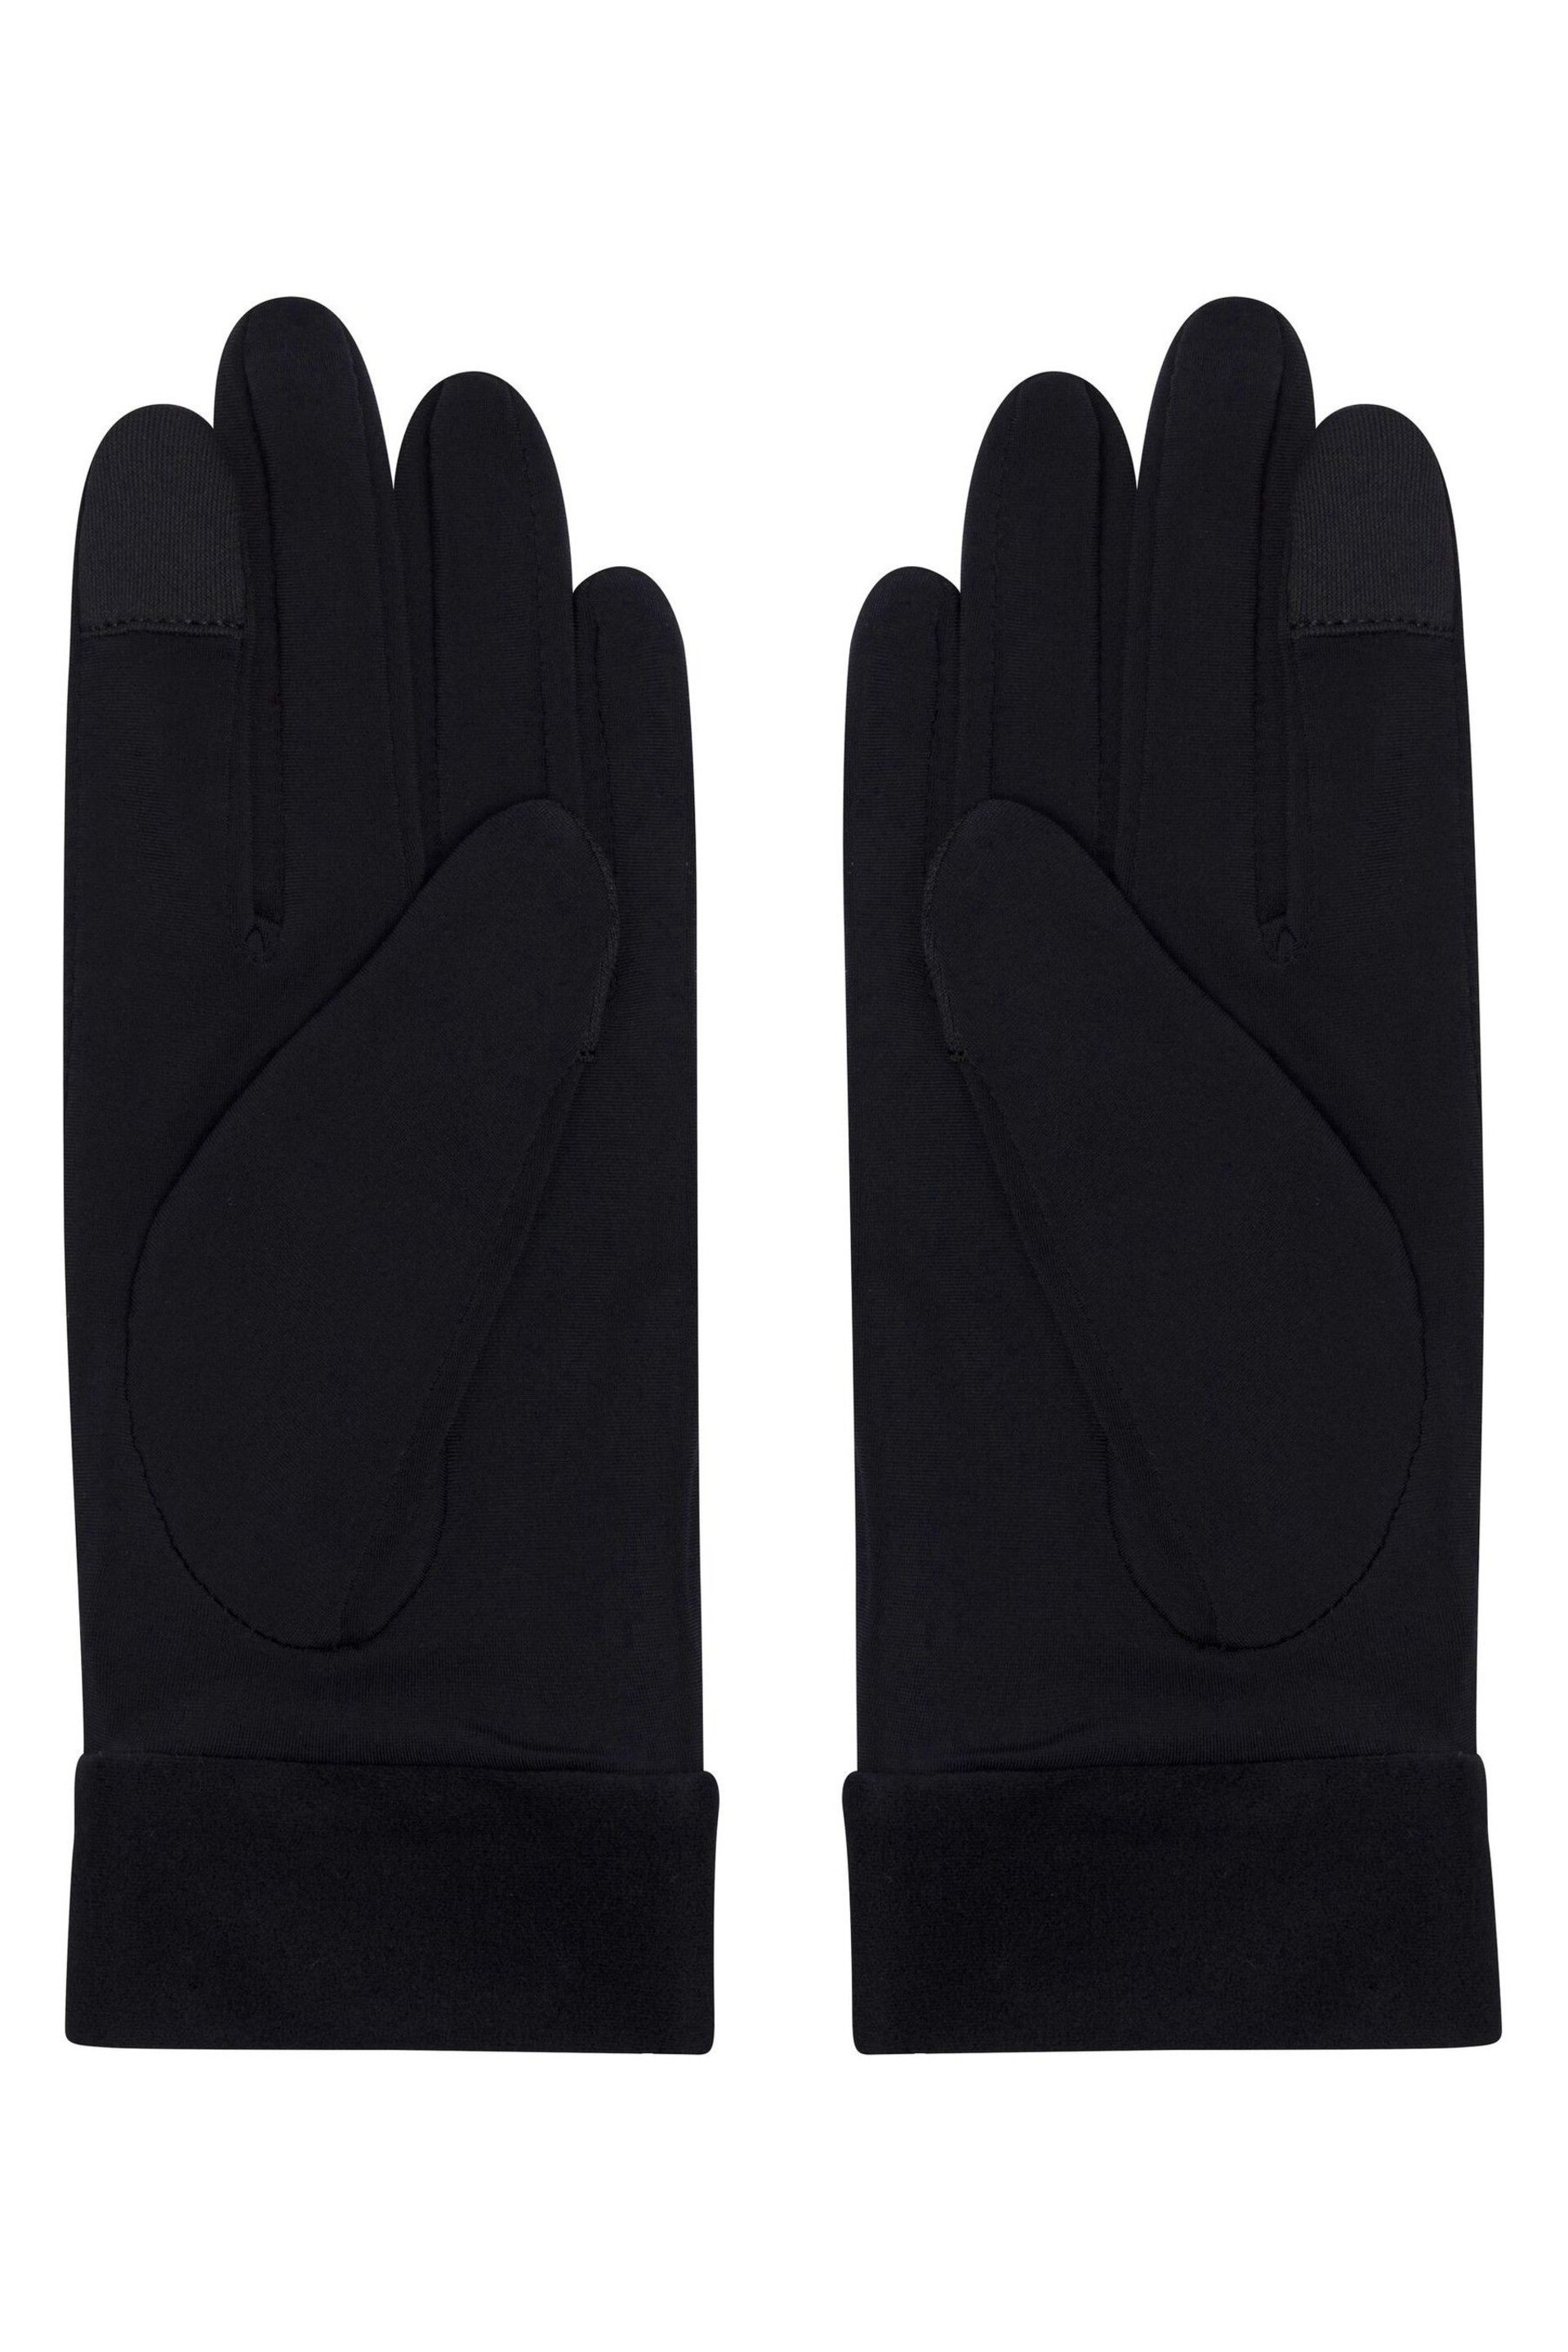 Berghaus Black Gloves - Image 2 of 4